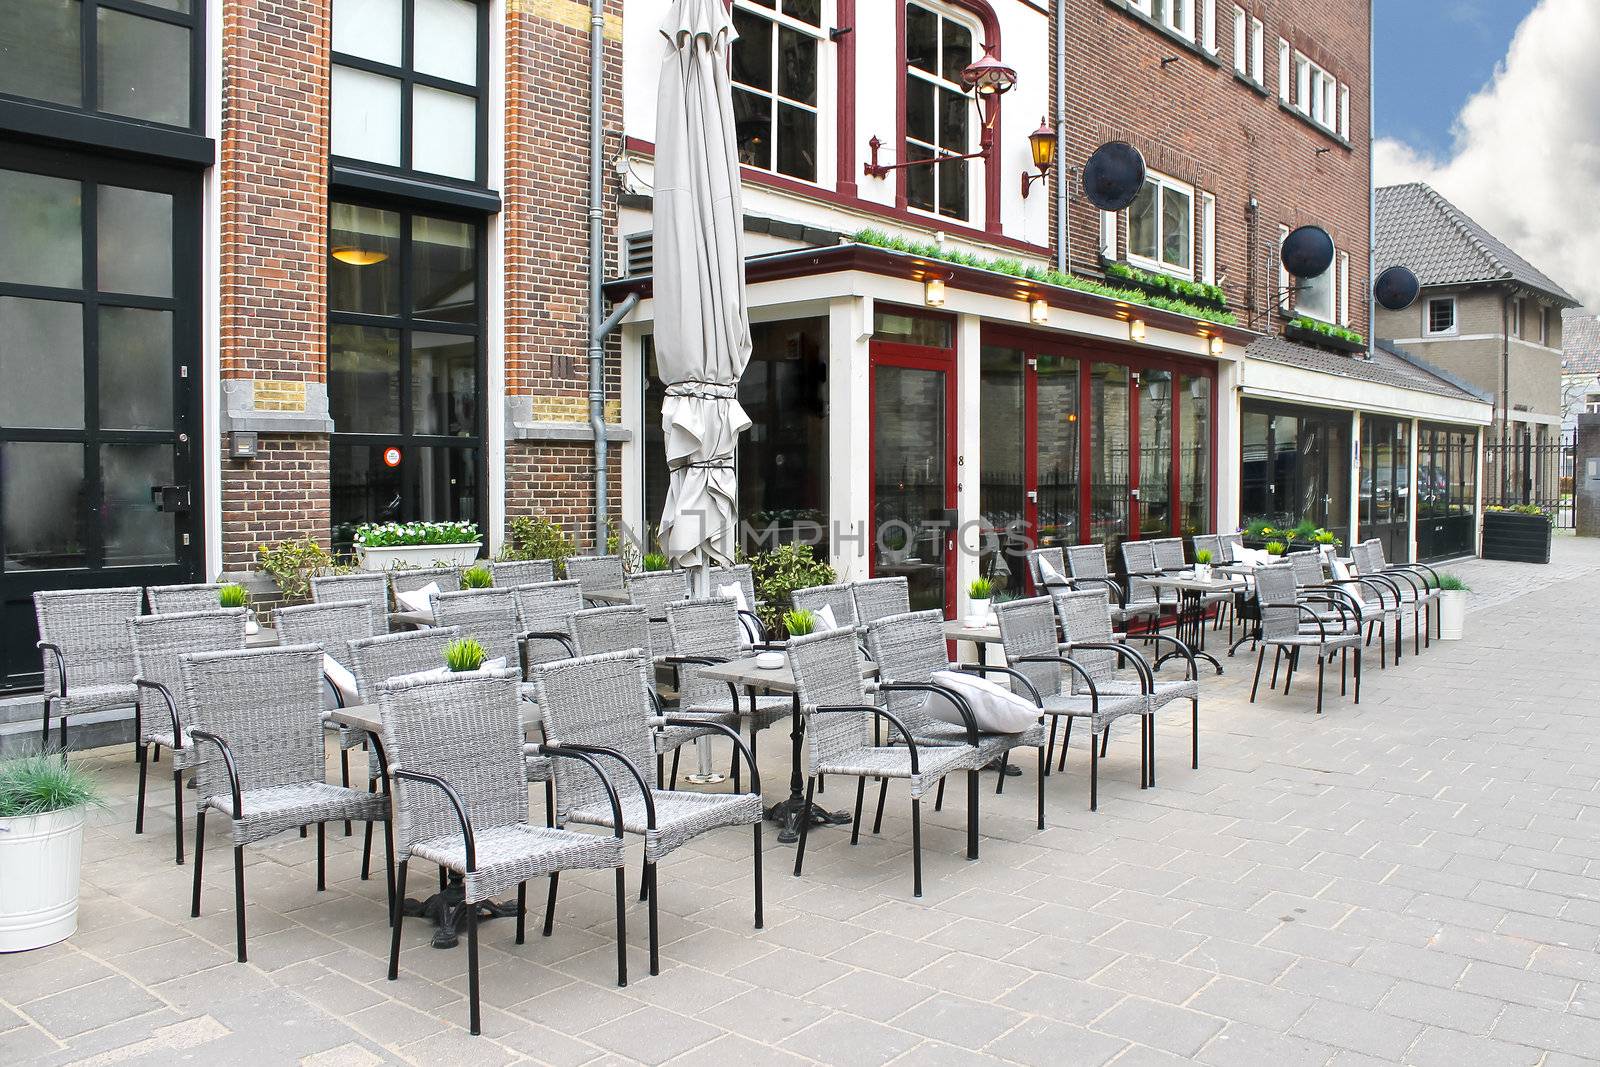 Street cafe in Den Bosch. Netherlands by NickNick